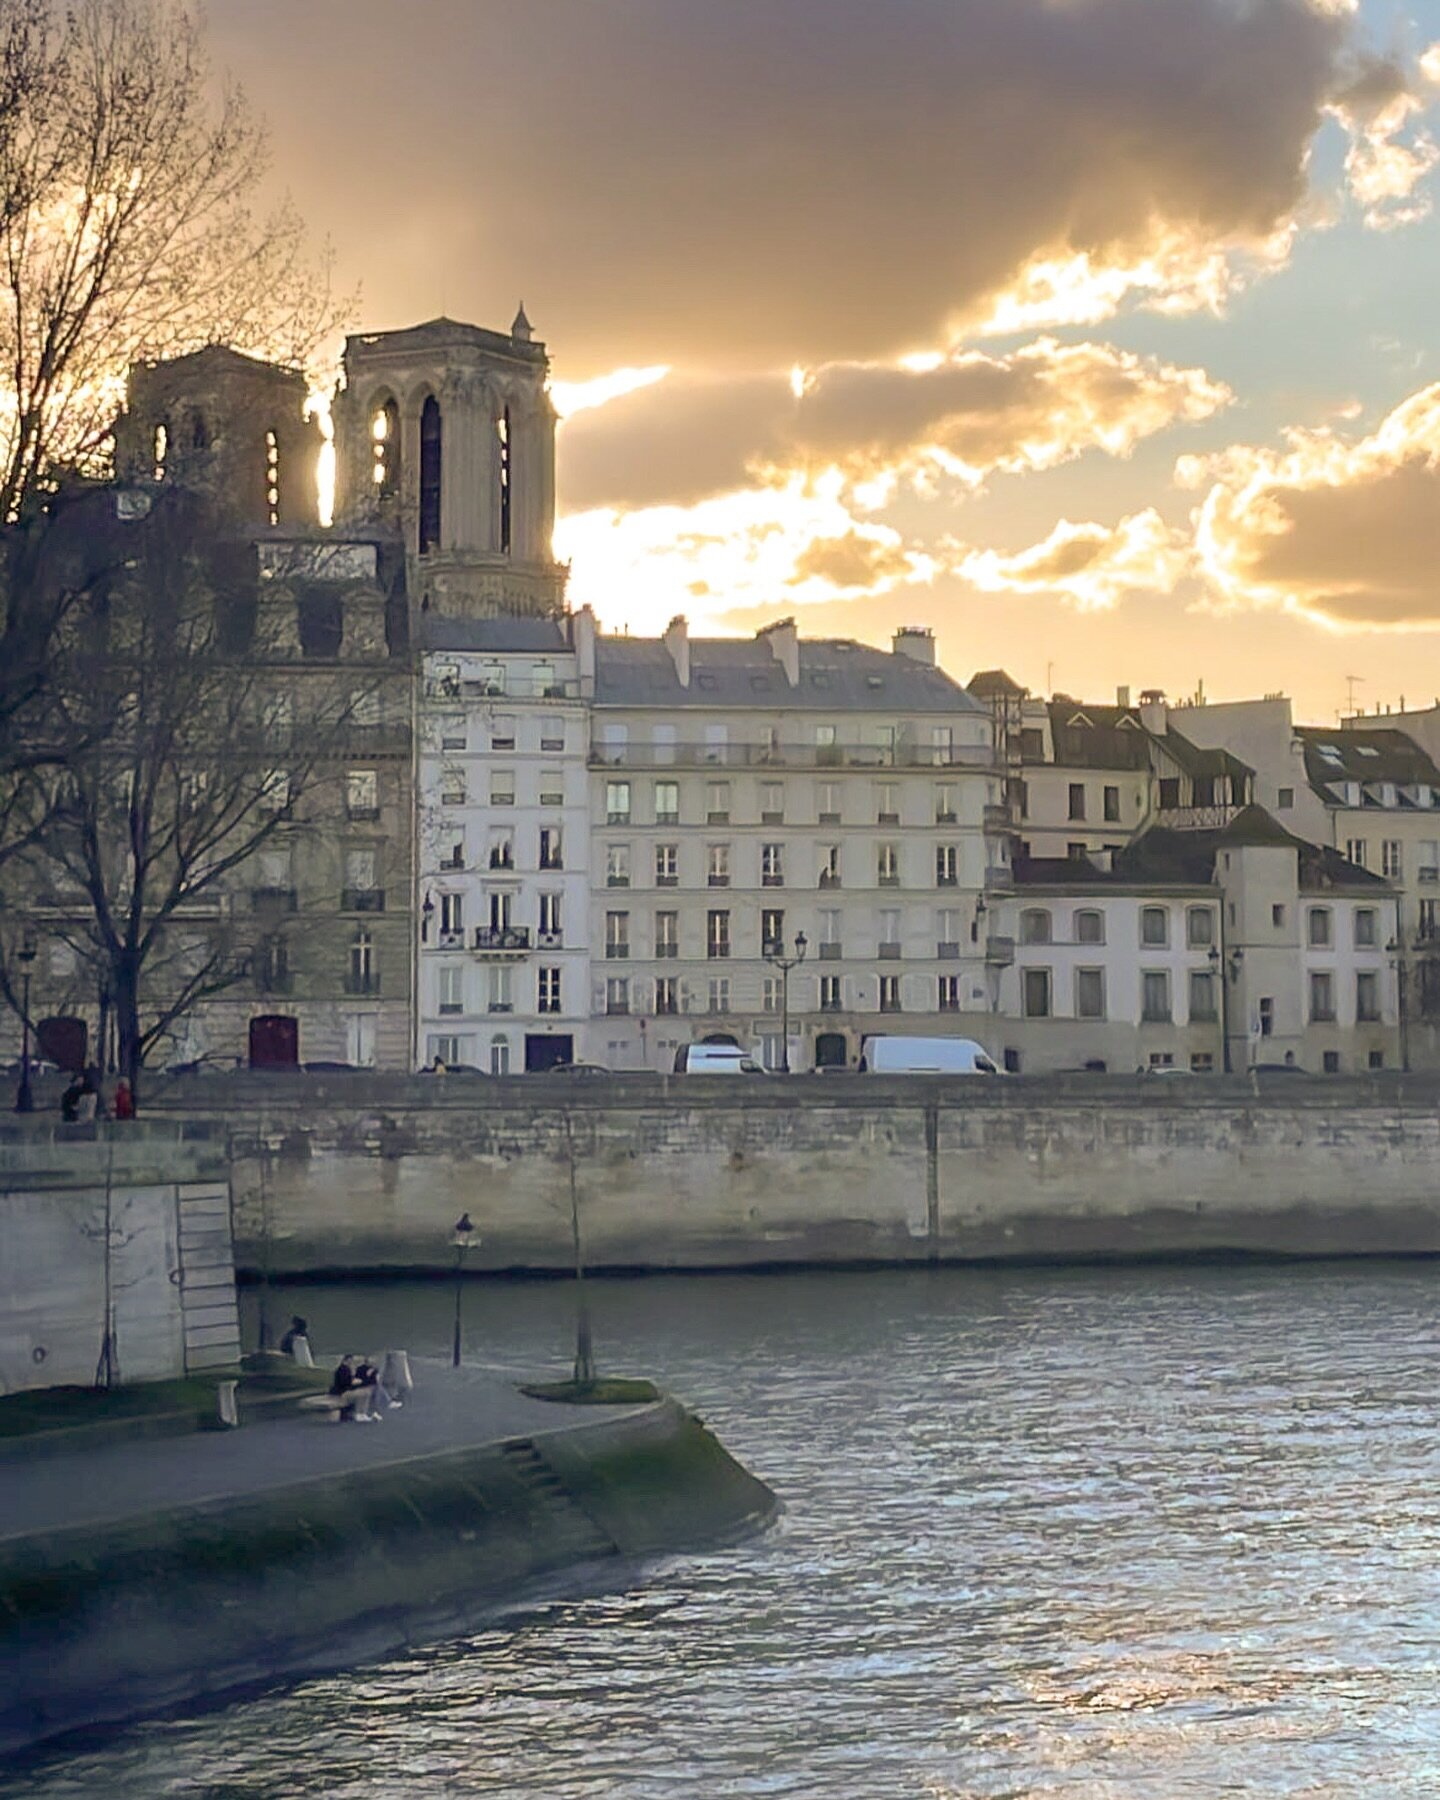 pretty sunset views of the Cath&eacute;drale Notre Dame ⚜️

#parisview #cathedralenotredame #parissunset #pontlouisphilippe #parispont #sunsetparis